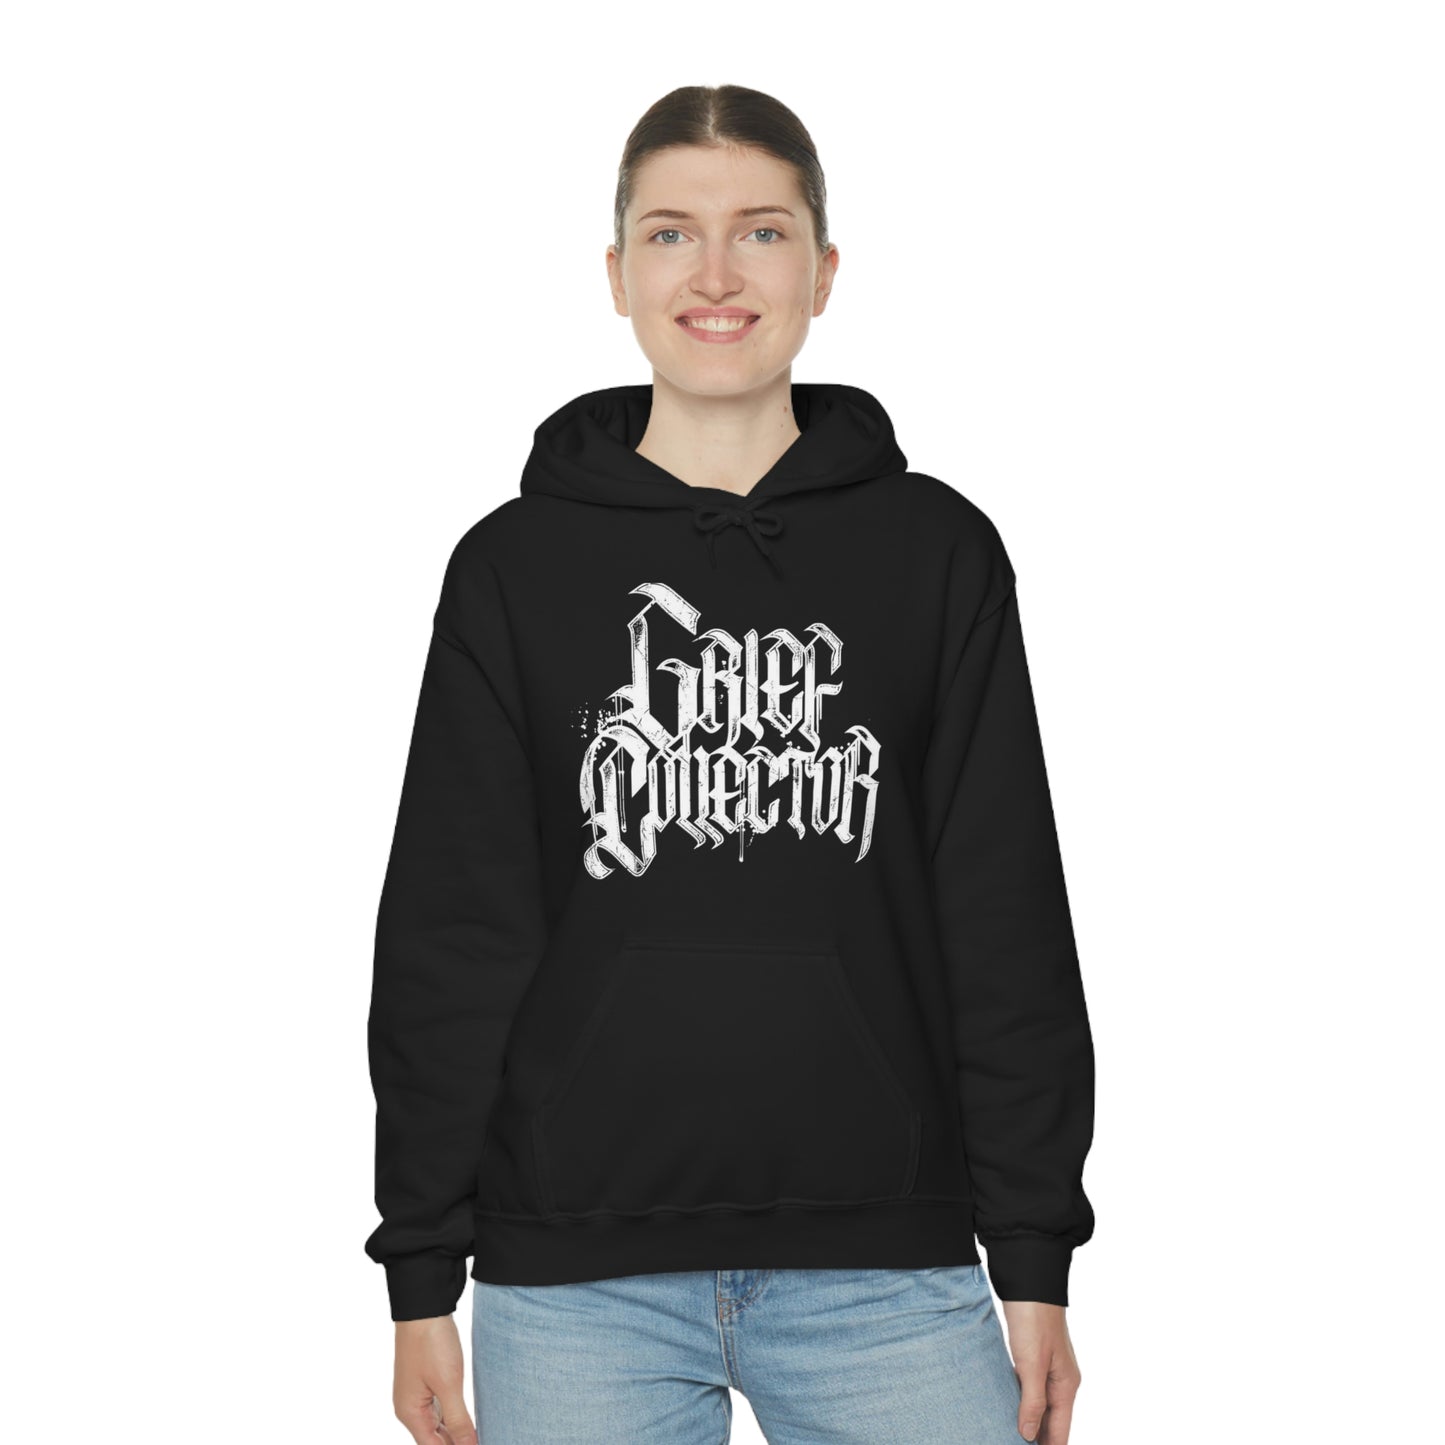 Grief Collector - In Times of Woe Hooded Sweatshirt (Europe)